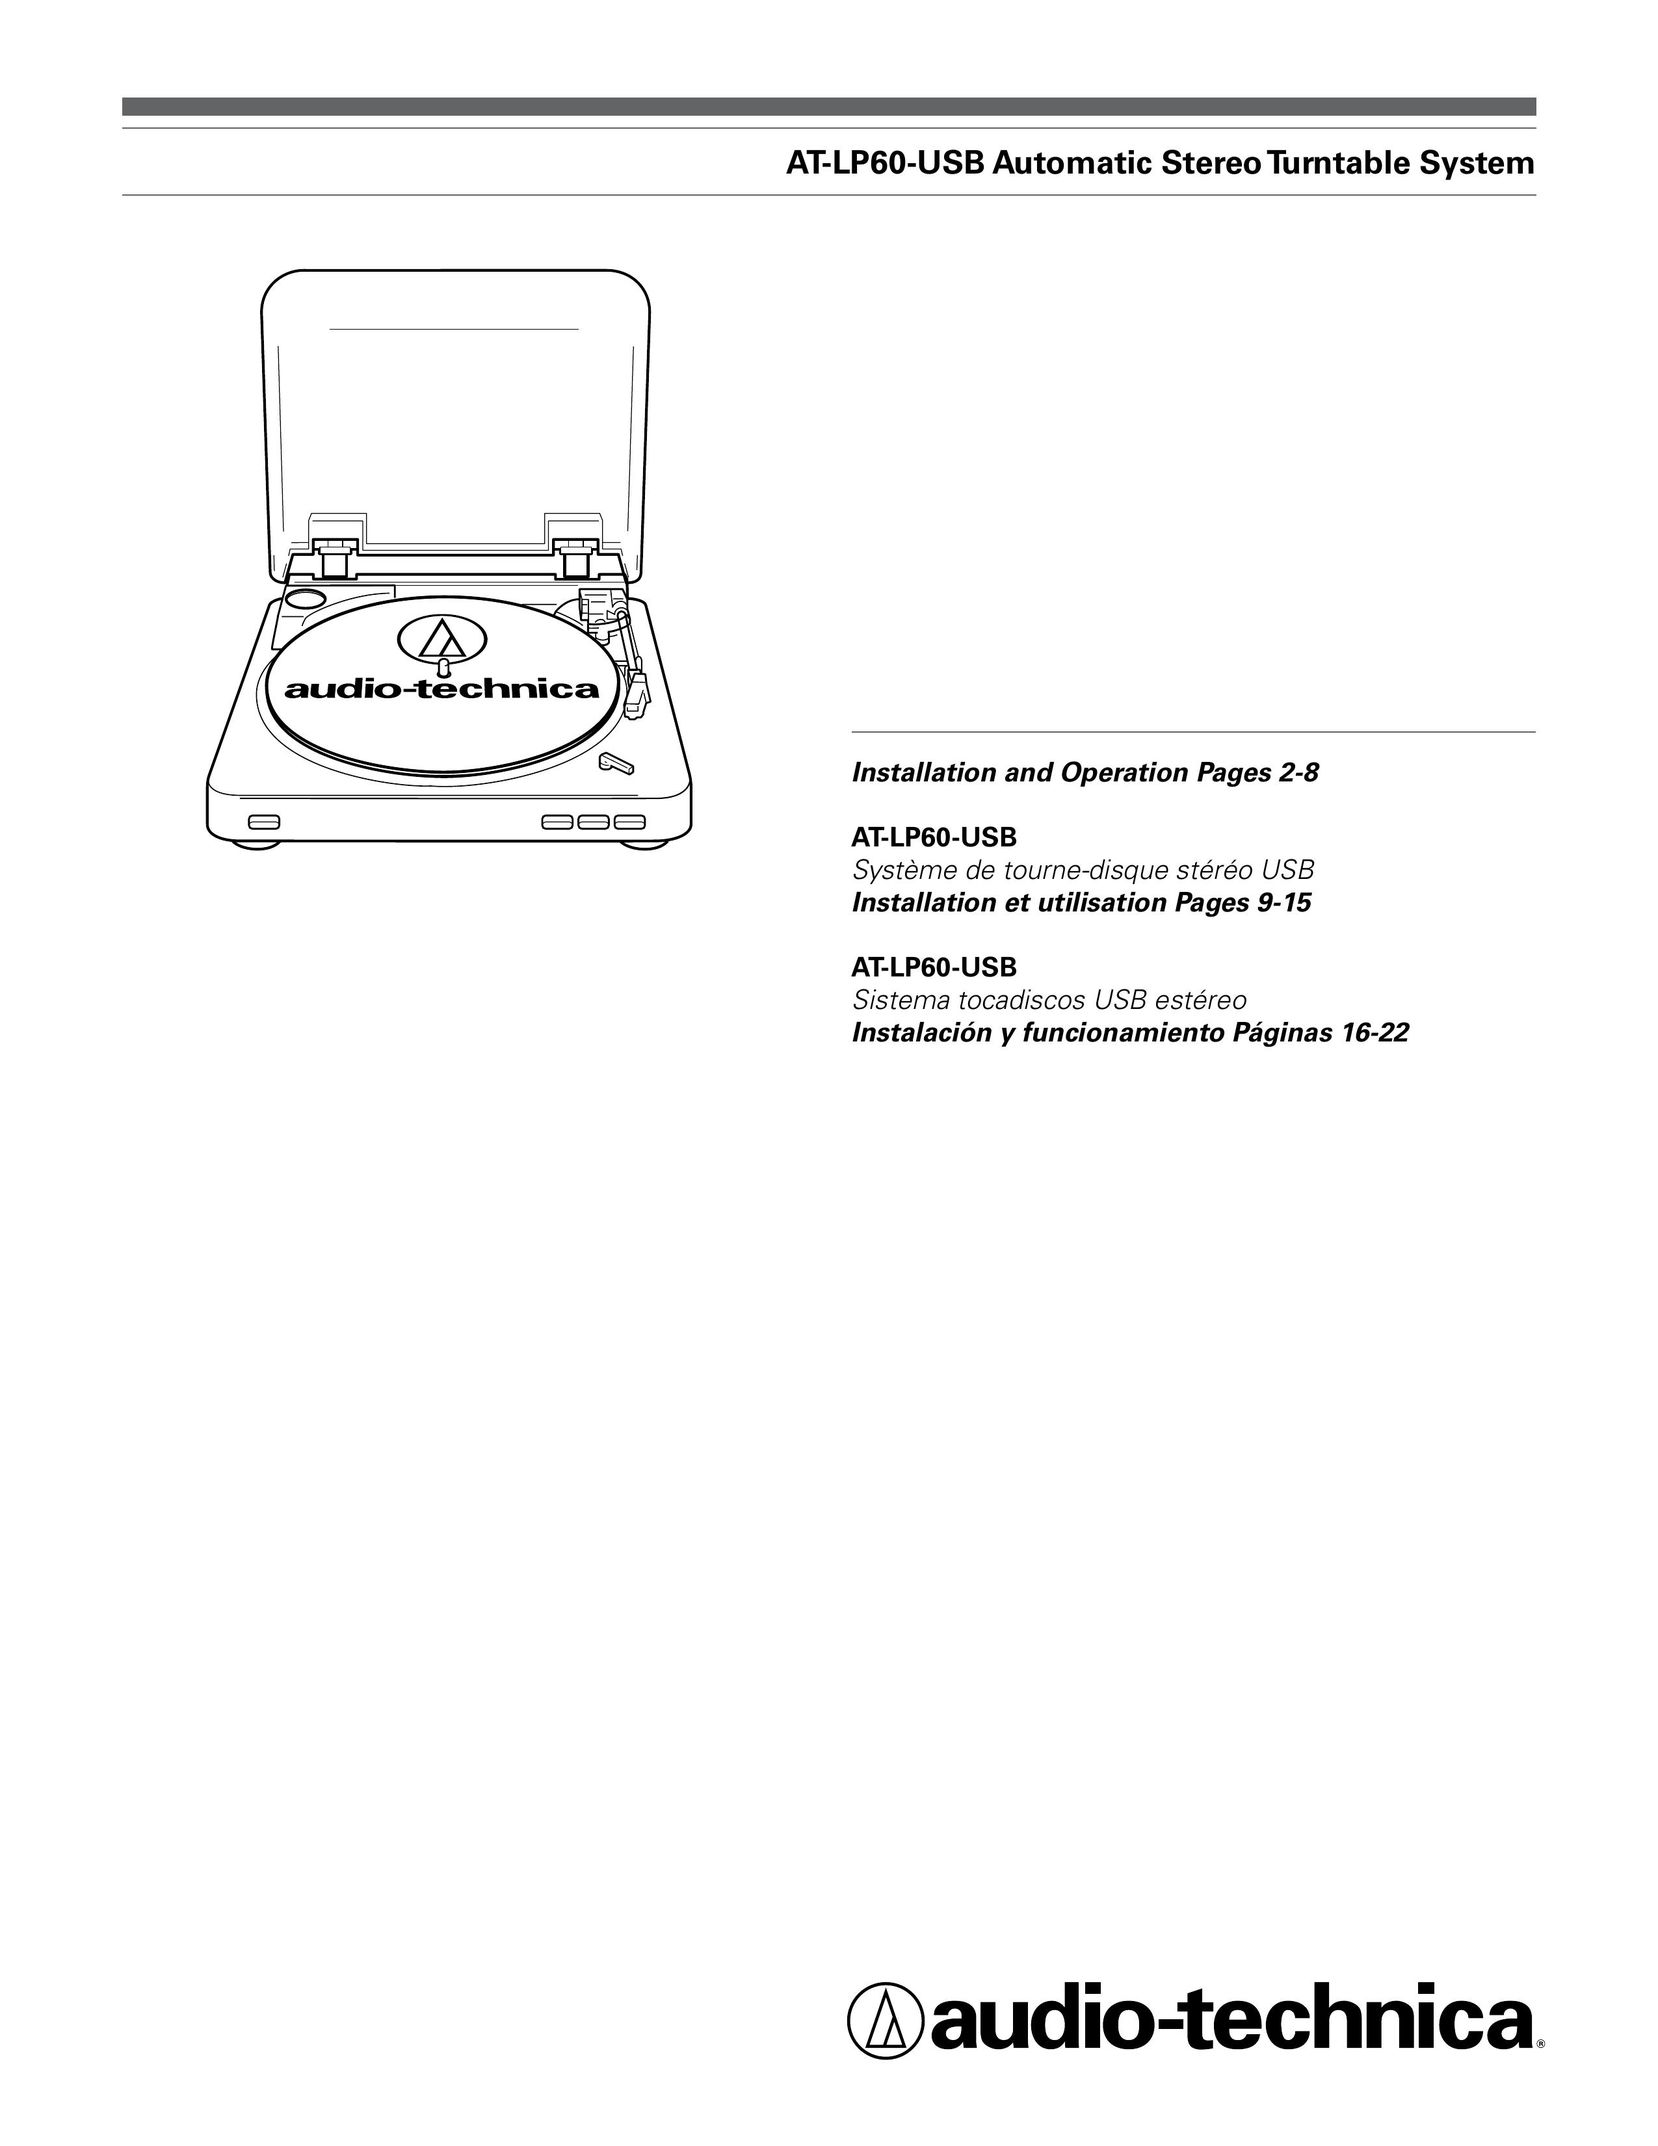 Audio-Technica AT-LP60-USB Turntable User Manual